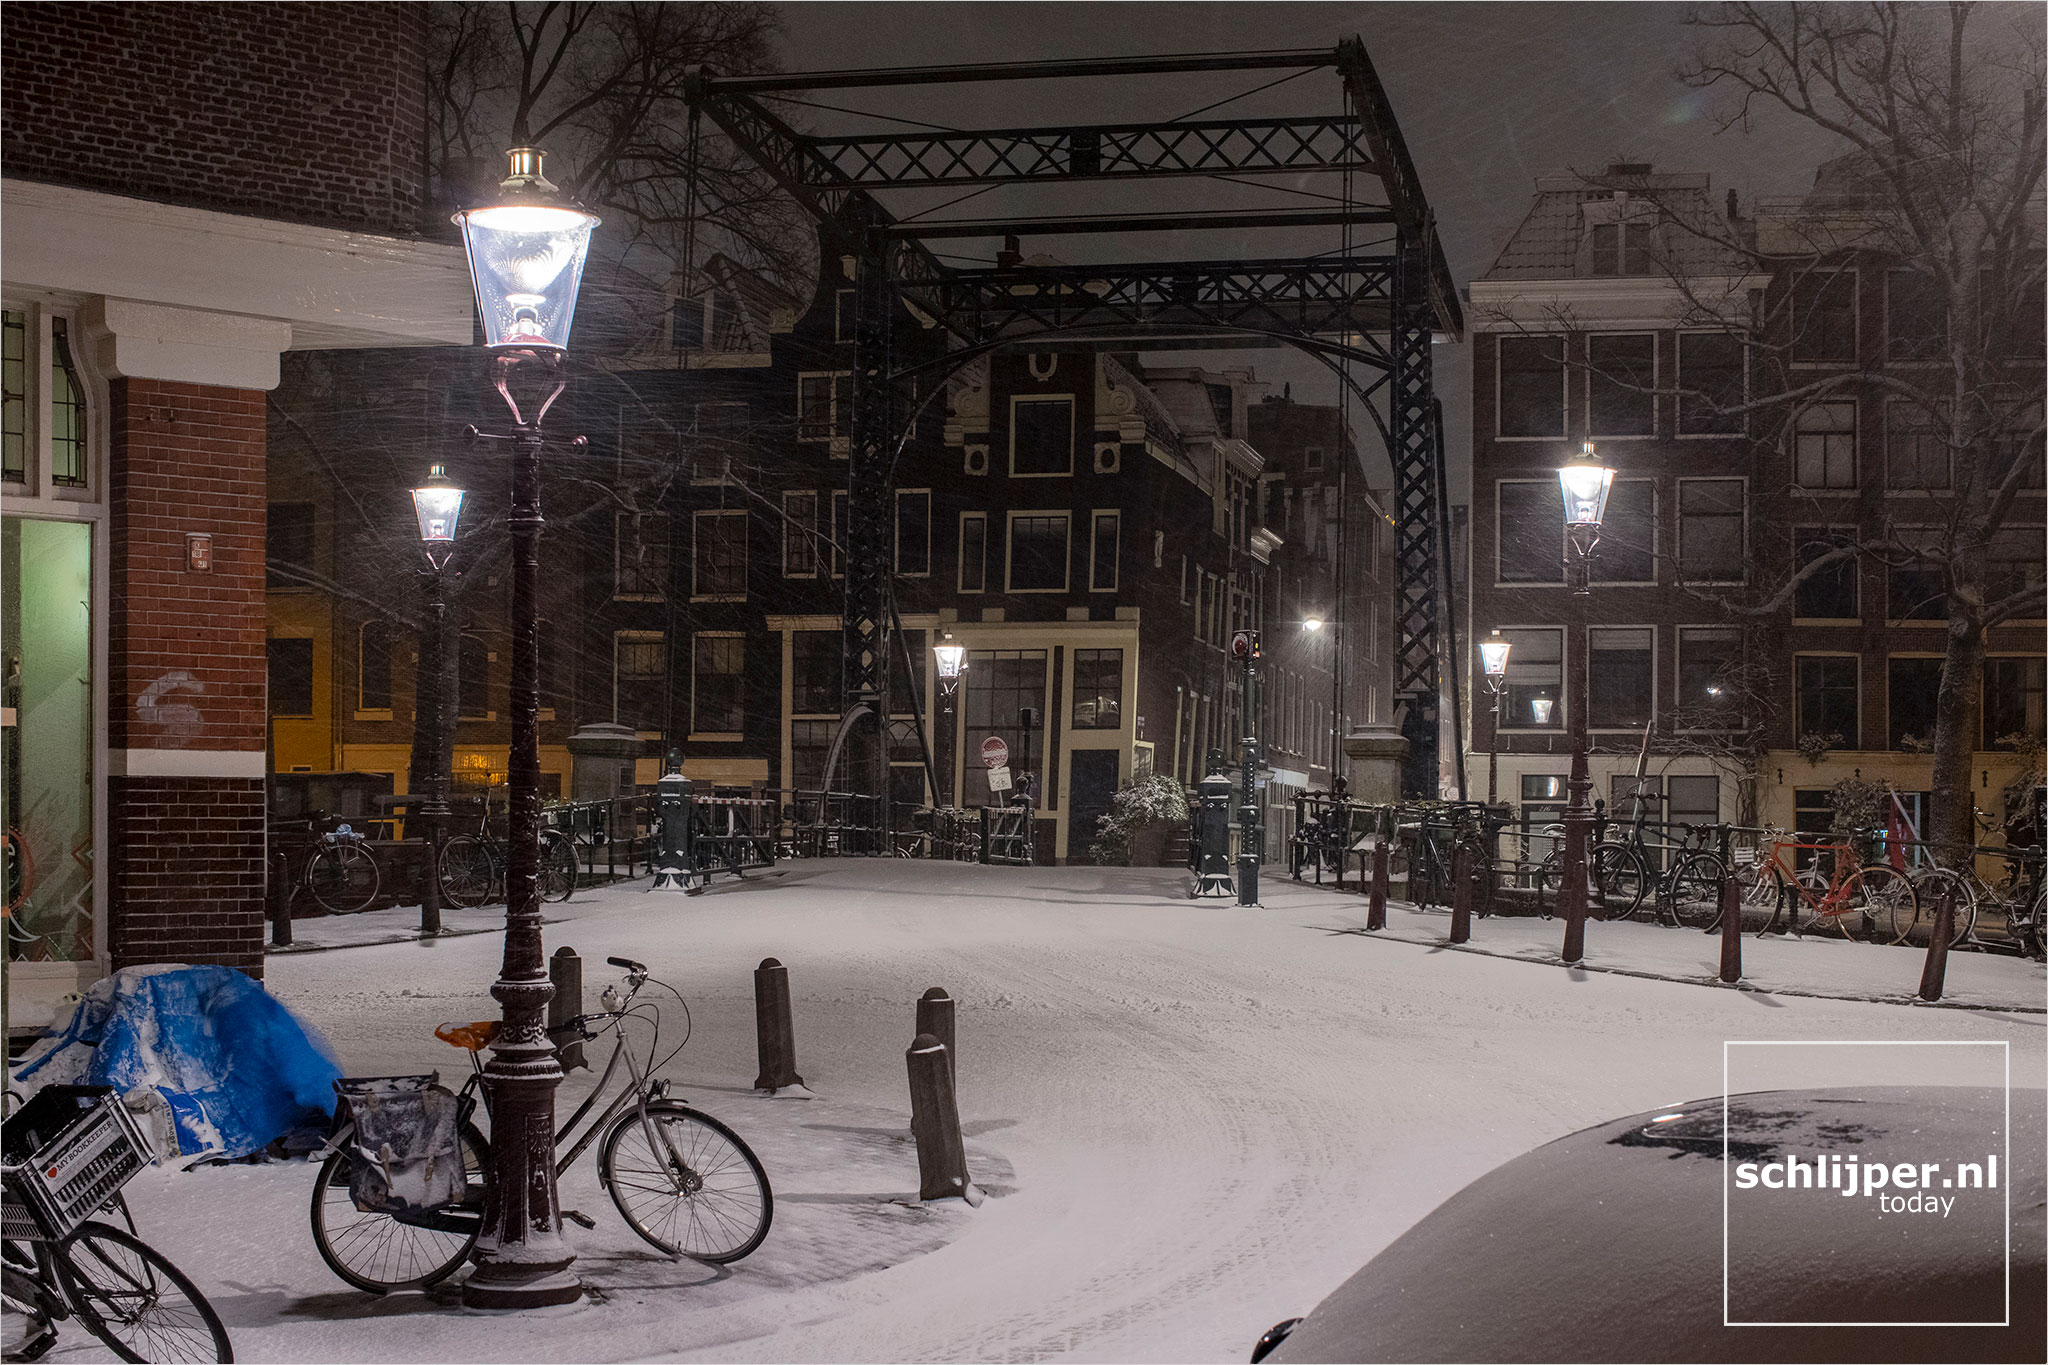 The Netherlands, Amsterdam, 7 februari 2021